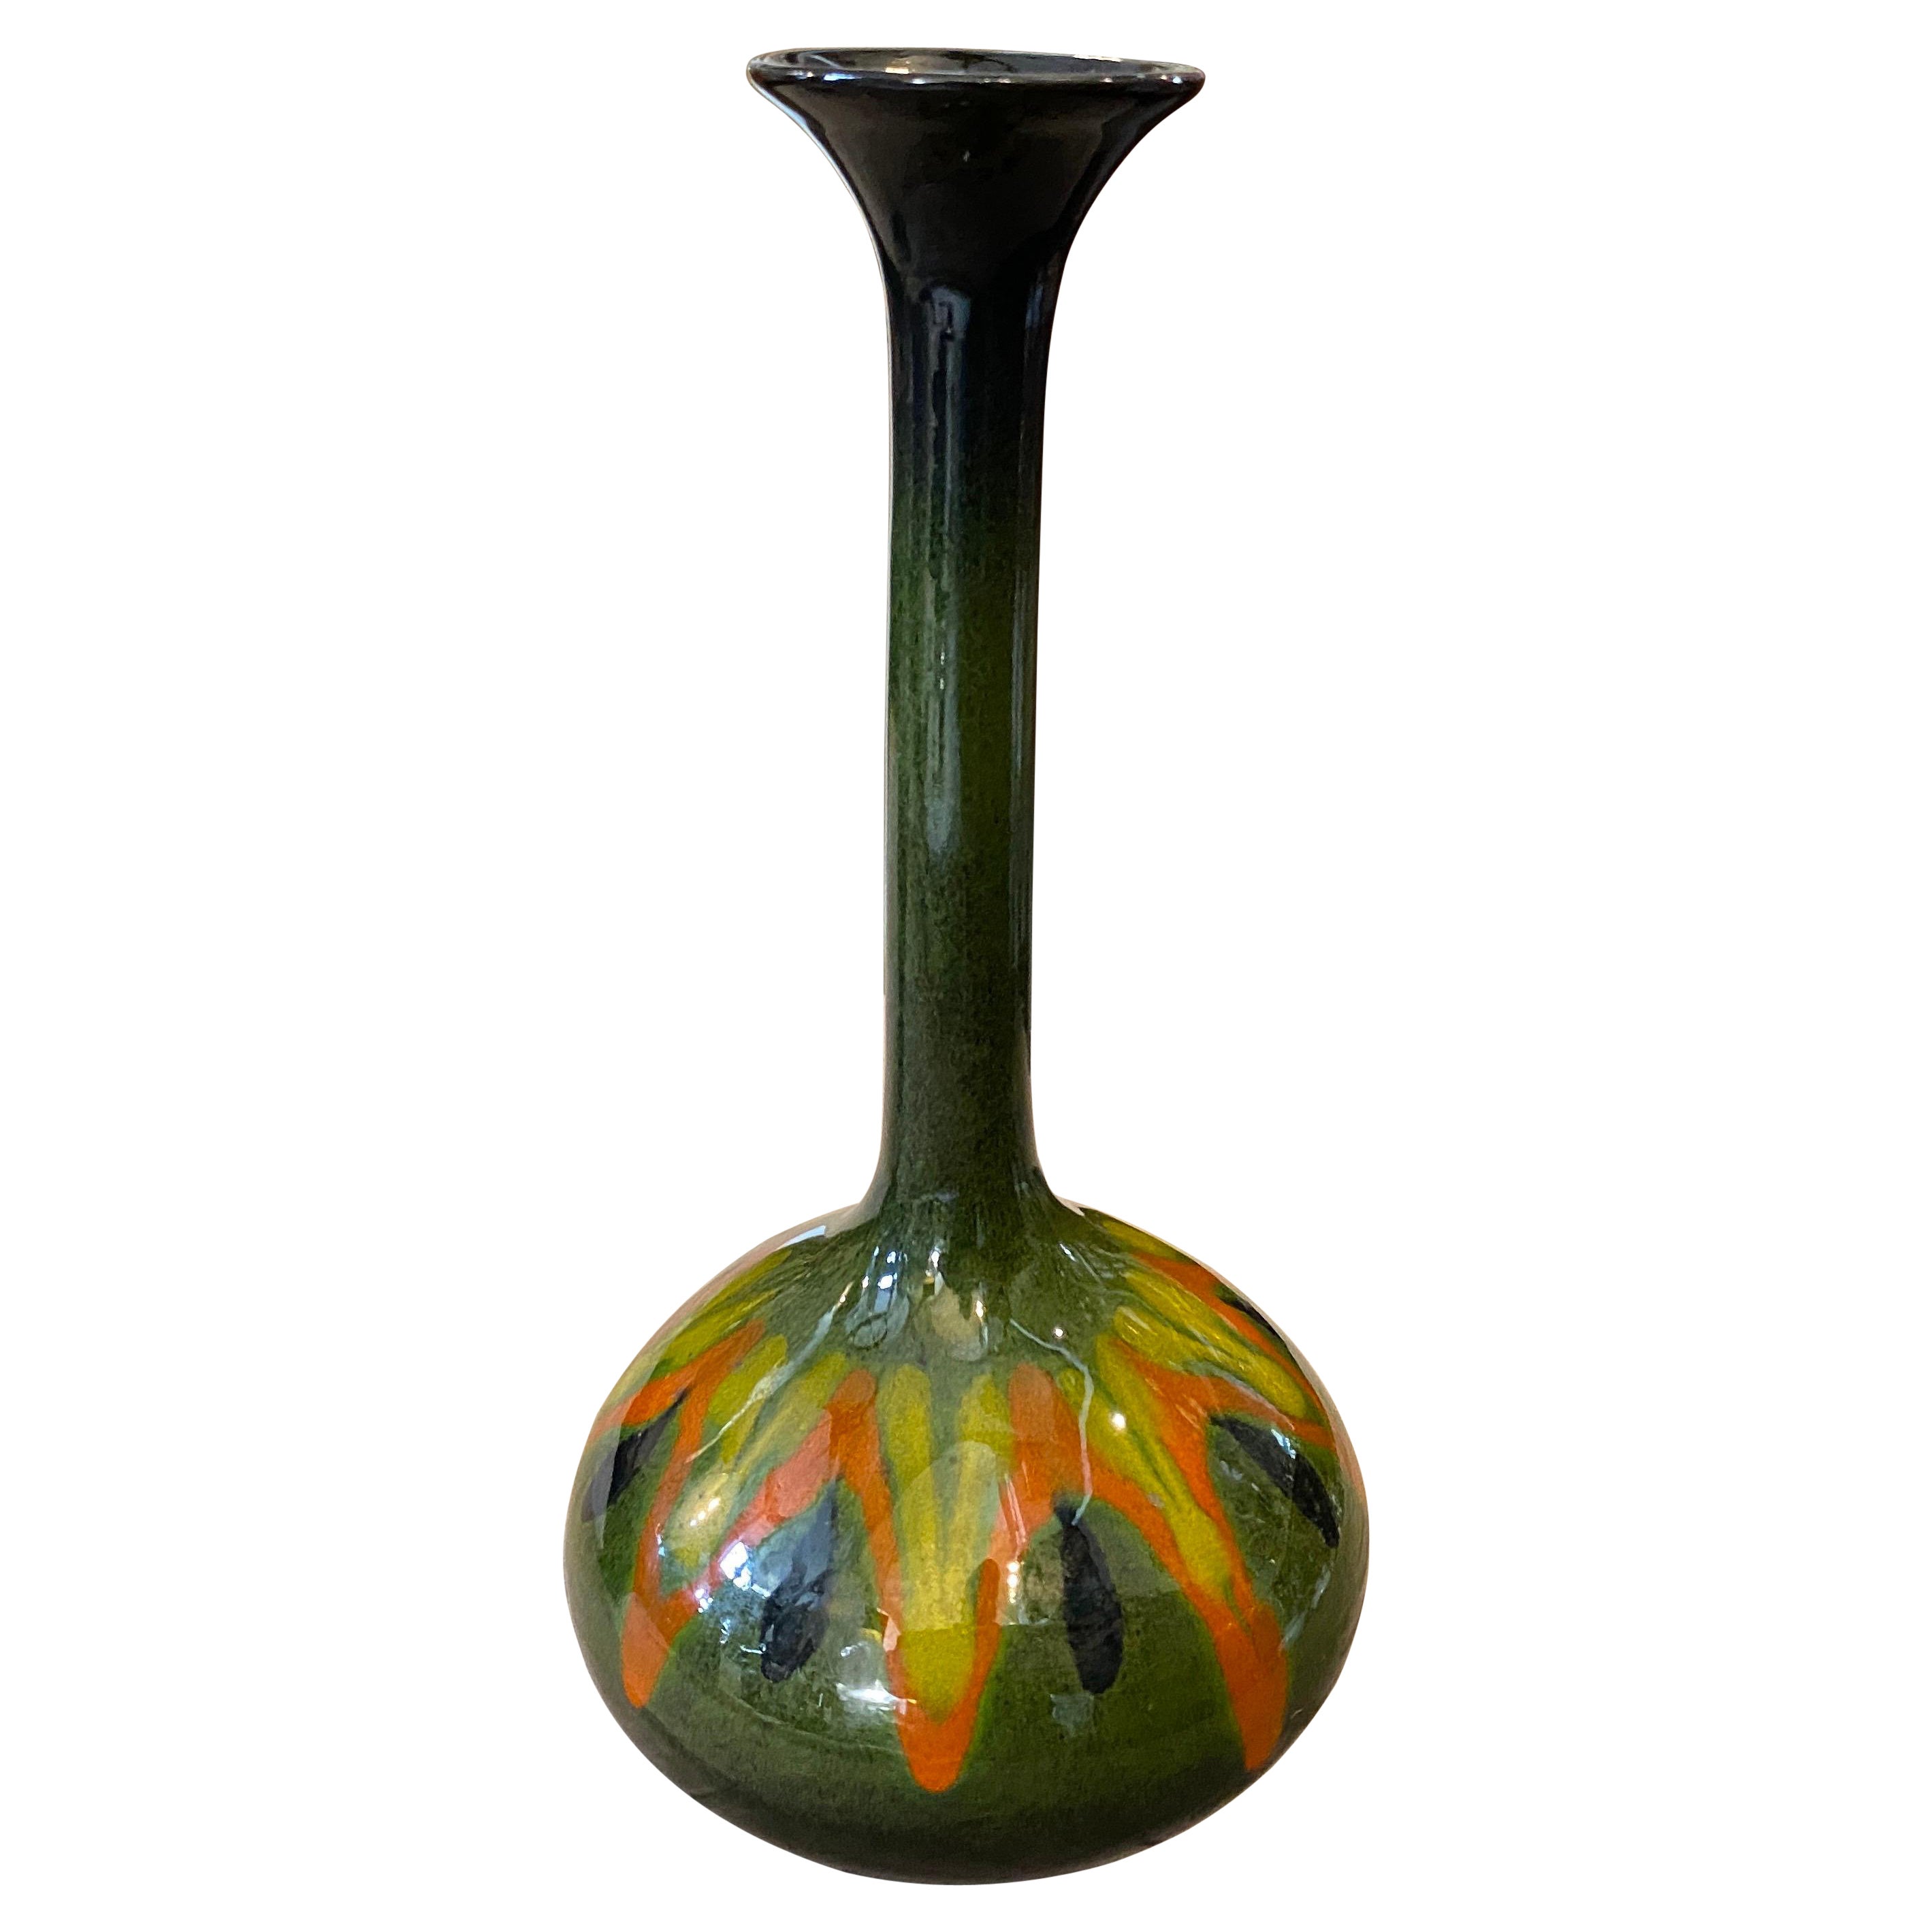 1970s Mid-Century Modern Single Flower Ceramic Vase by Bertoncello